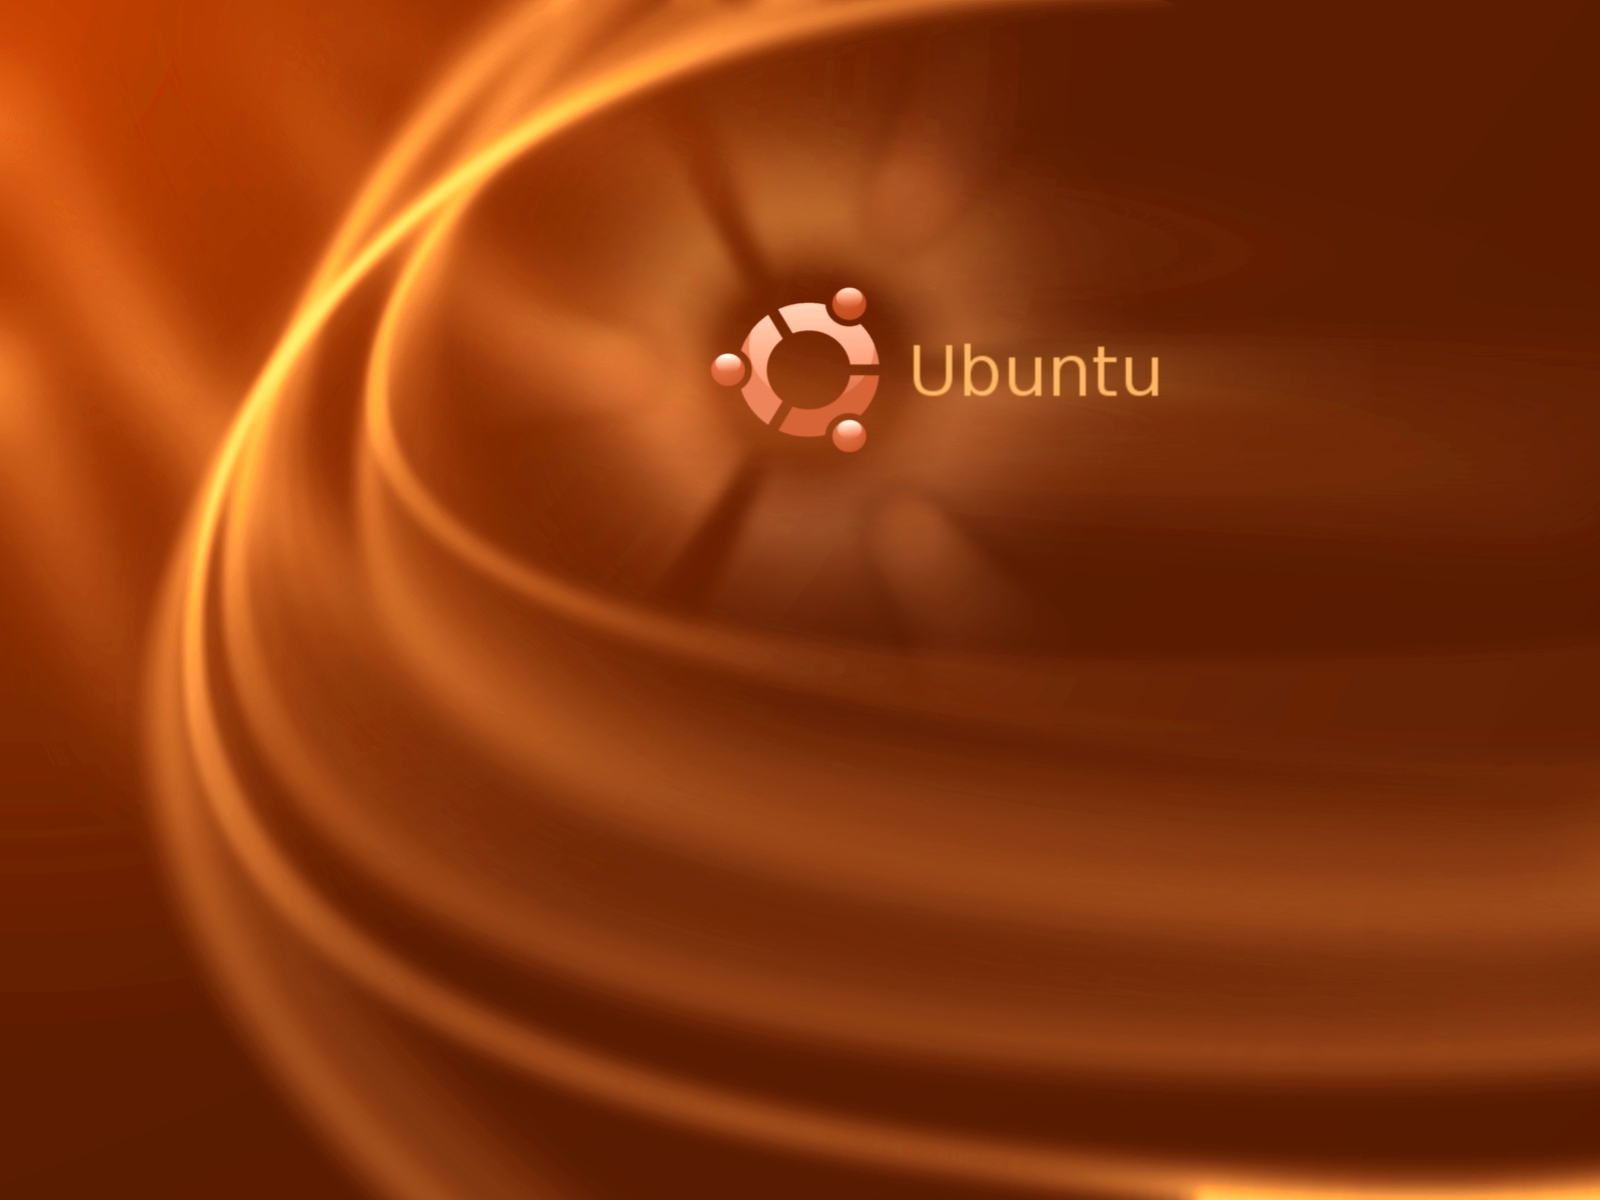 New Ubuntu Wallpapers   NoobsLab UbuntuLinux News Reviews 1600x1200